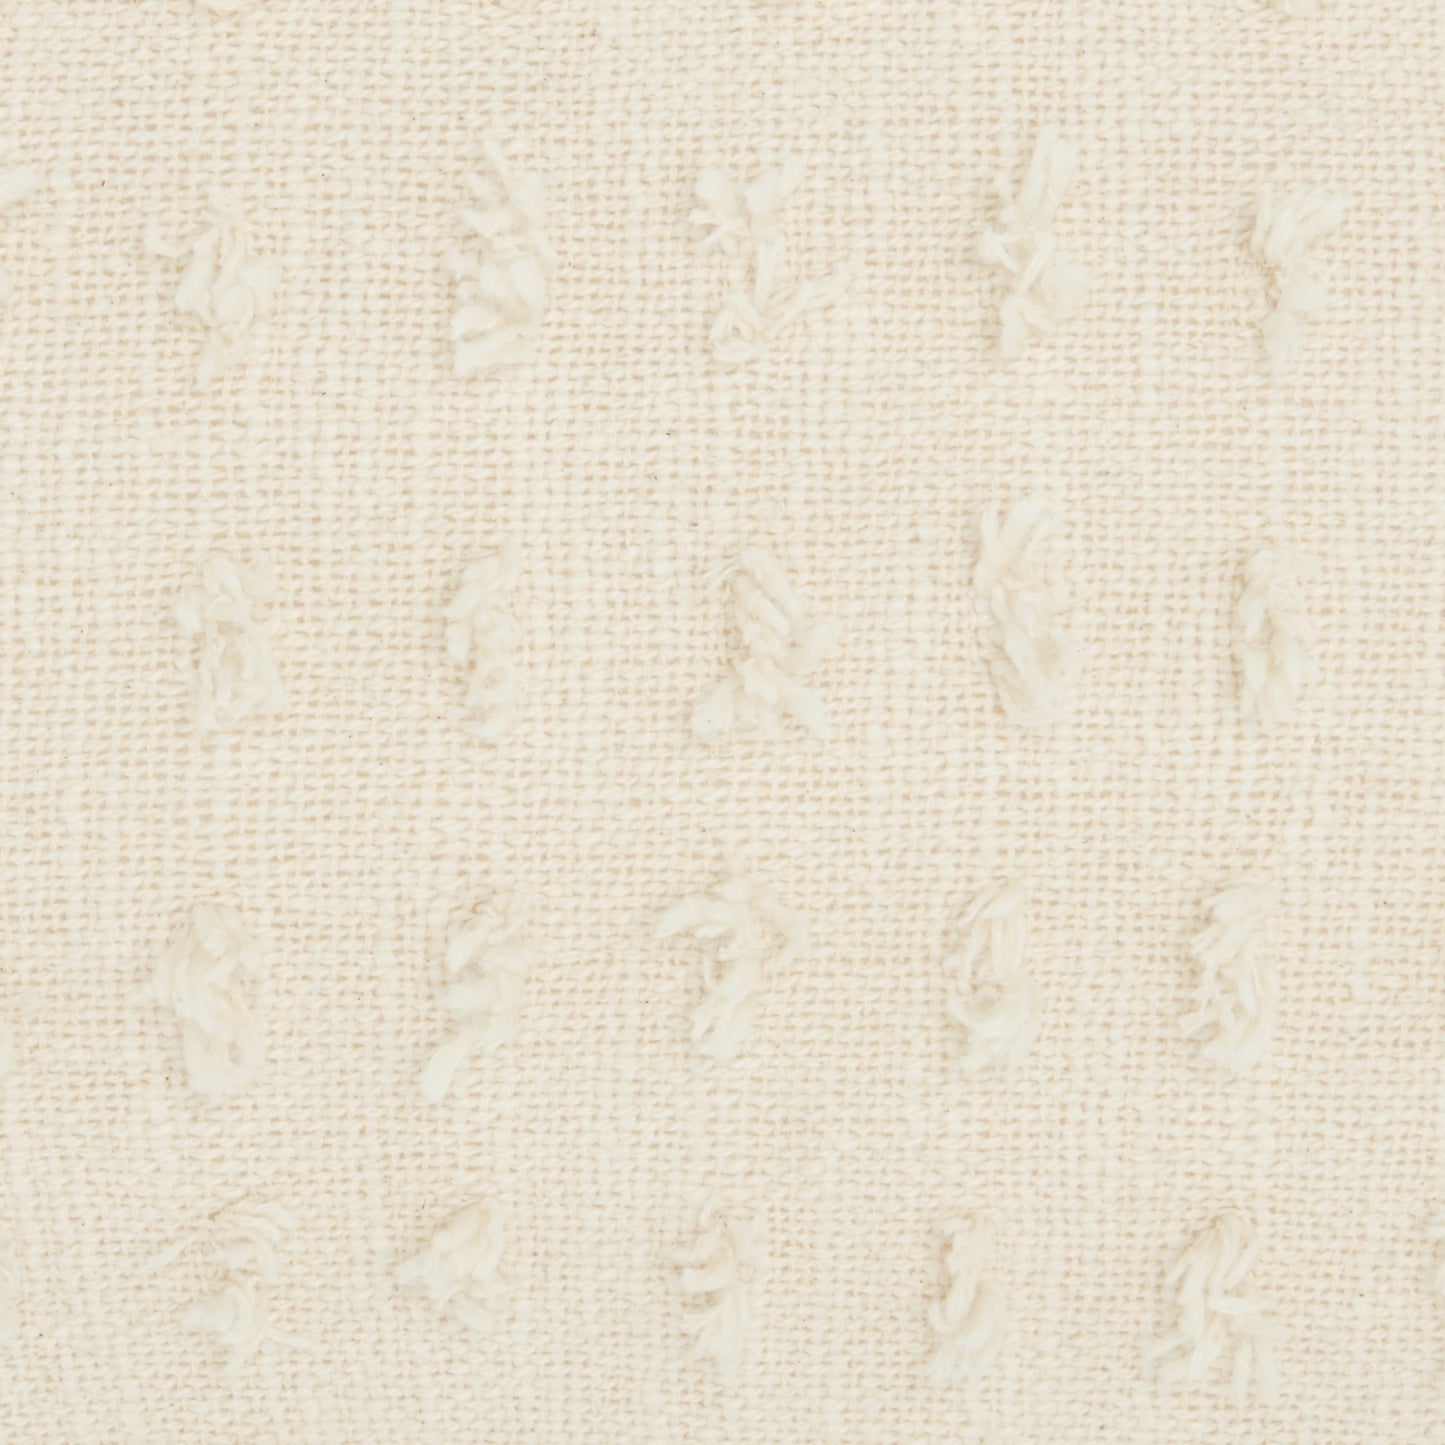 Tassel Detailed White Lumbar Pillow